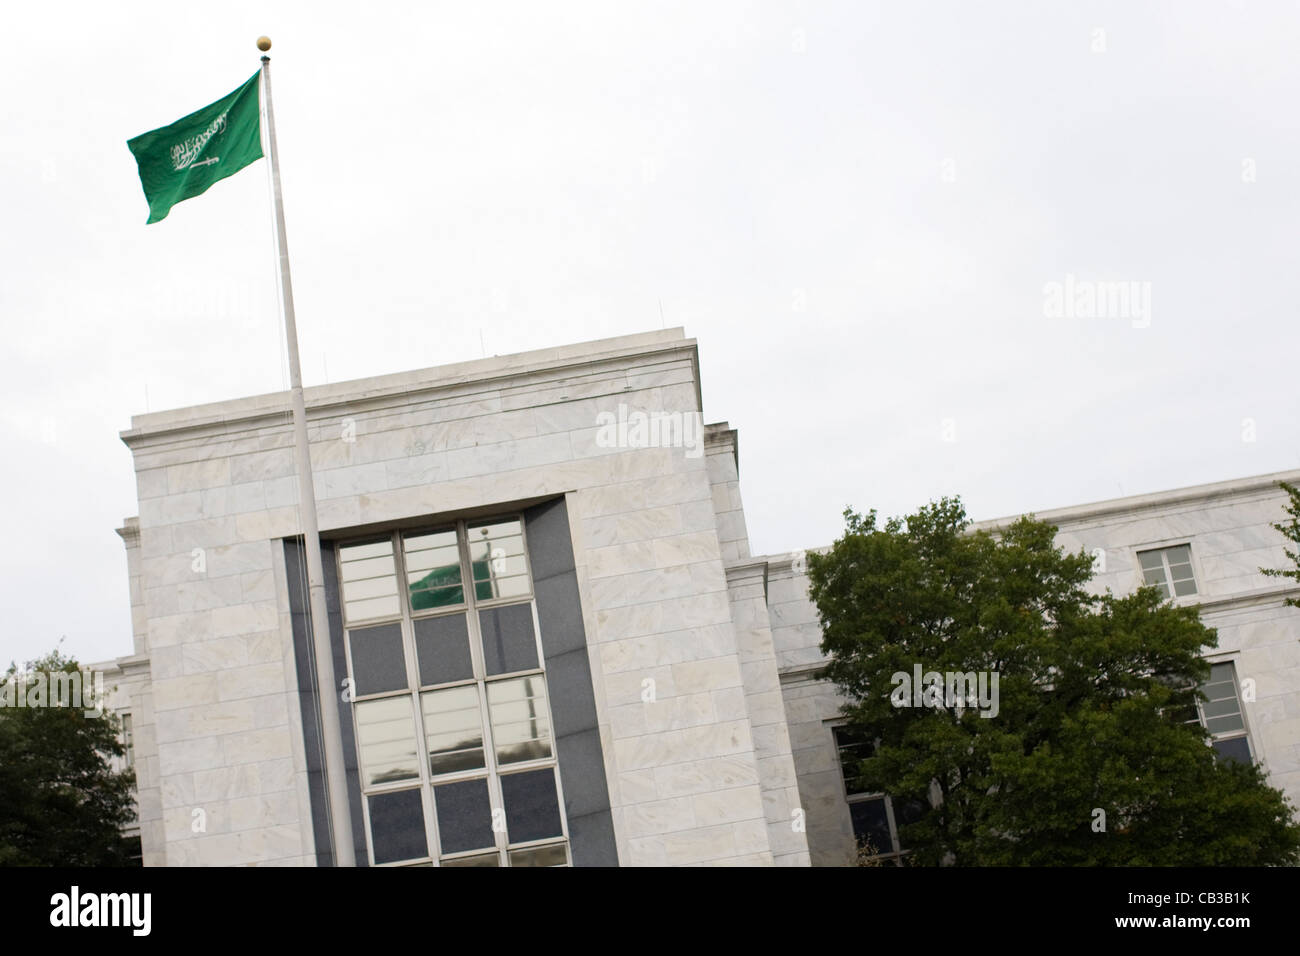 The Embassy of the Kingdom of Saudi Arabia in Washington, DC.  Stock Photo